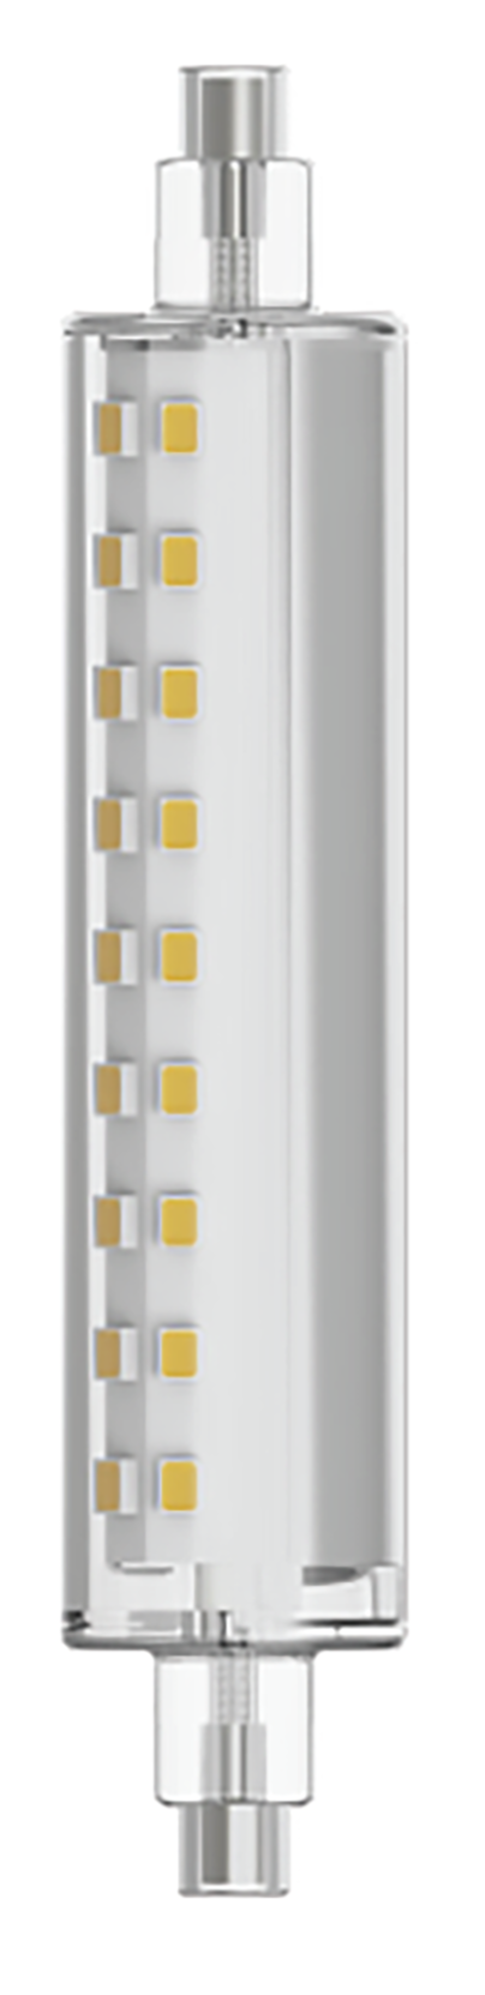 Rebobinar Selección conjunta Marcha mala Bombilla LED lineal R7S 10,5W 4000K LEXMAN | Leroy Merlin